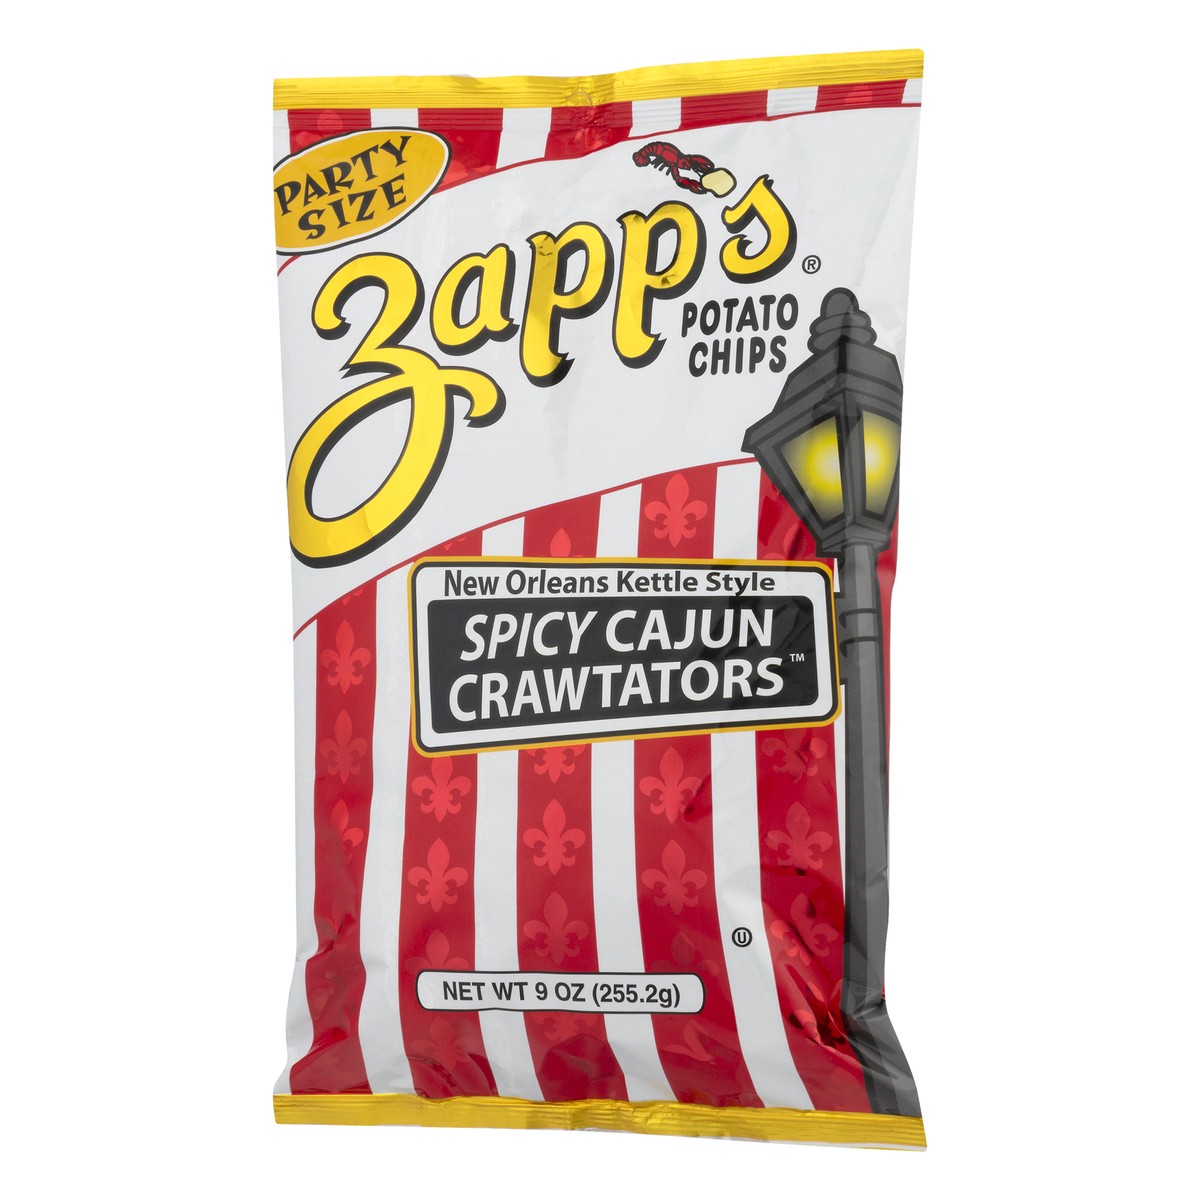 slide 1 of 9, Zapp's Party Size New Orleans Kettle Style Spicy Cajun Crawtators Potato Chips 9.0 oz, 9 oz